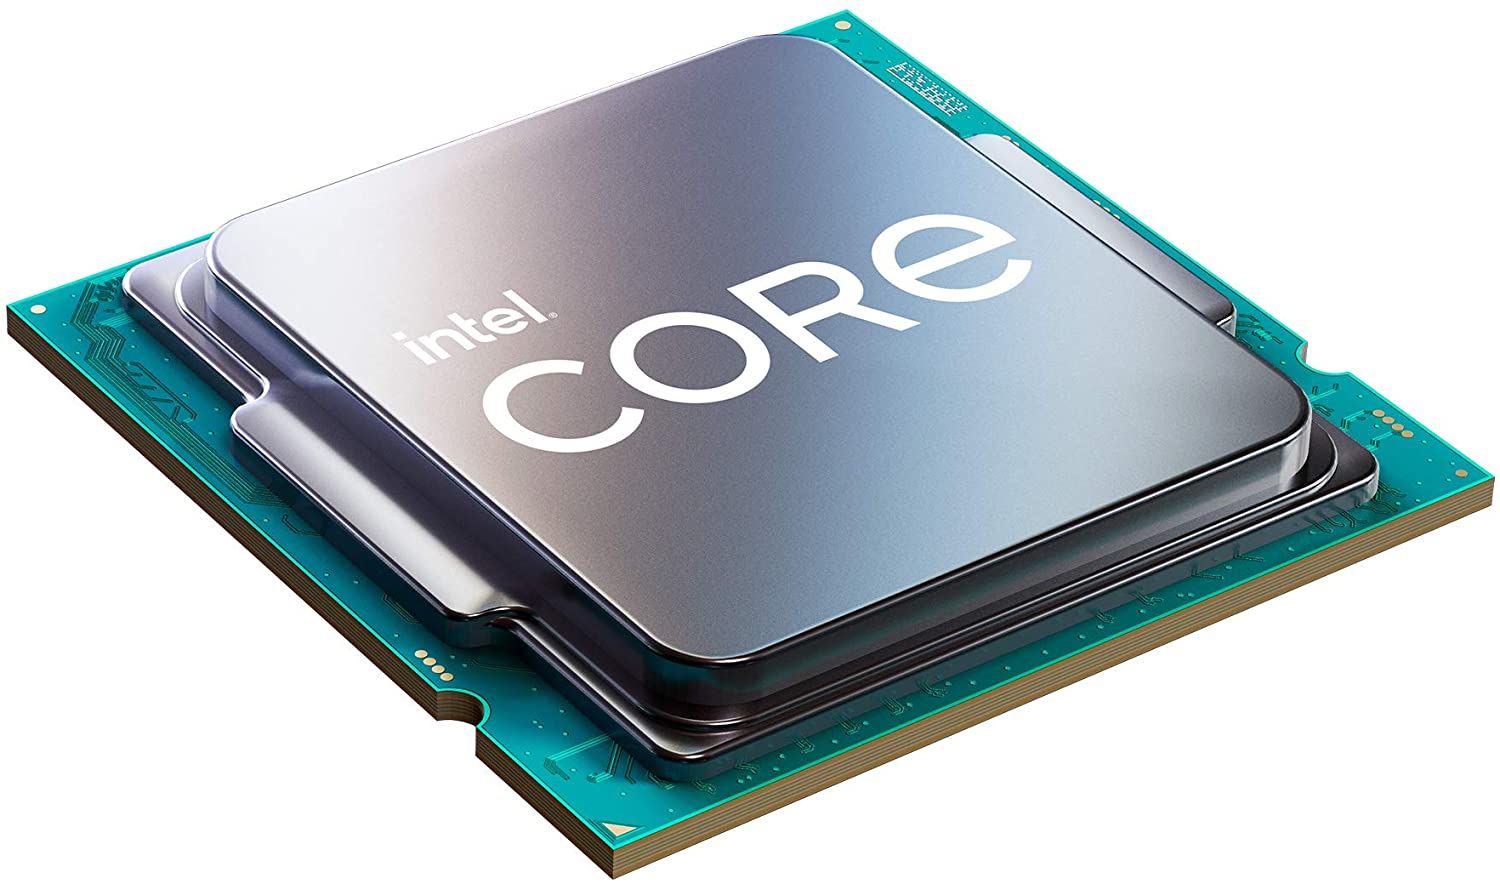 Intel Core i5-11600K chip